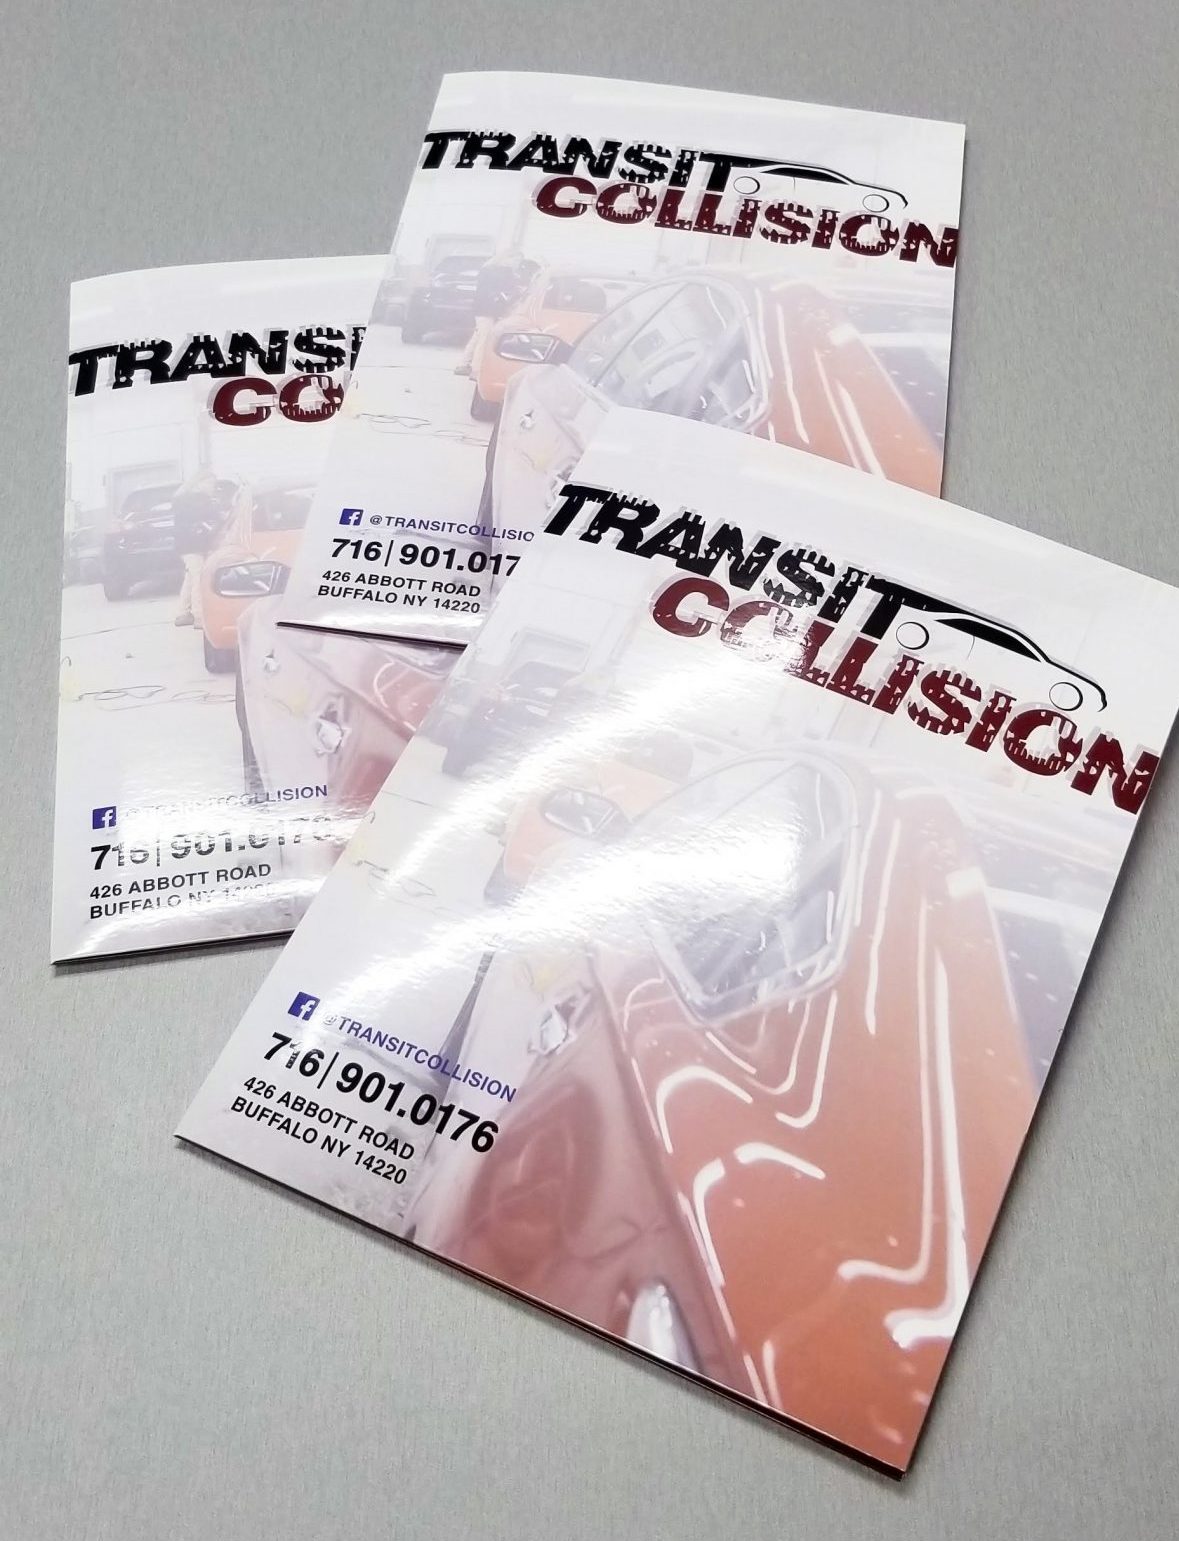 Transit Collision Folder